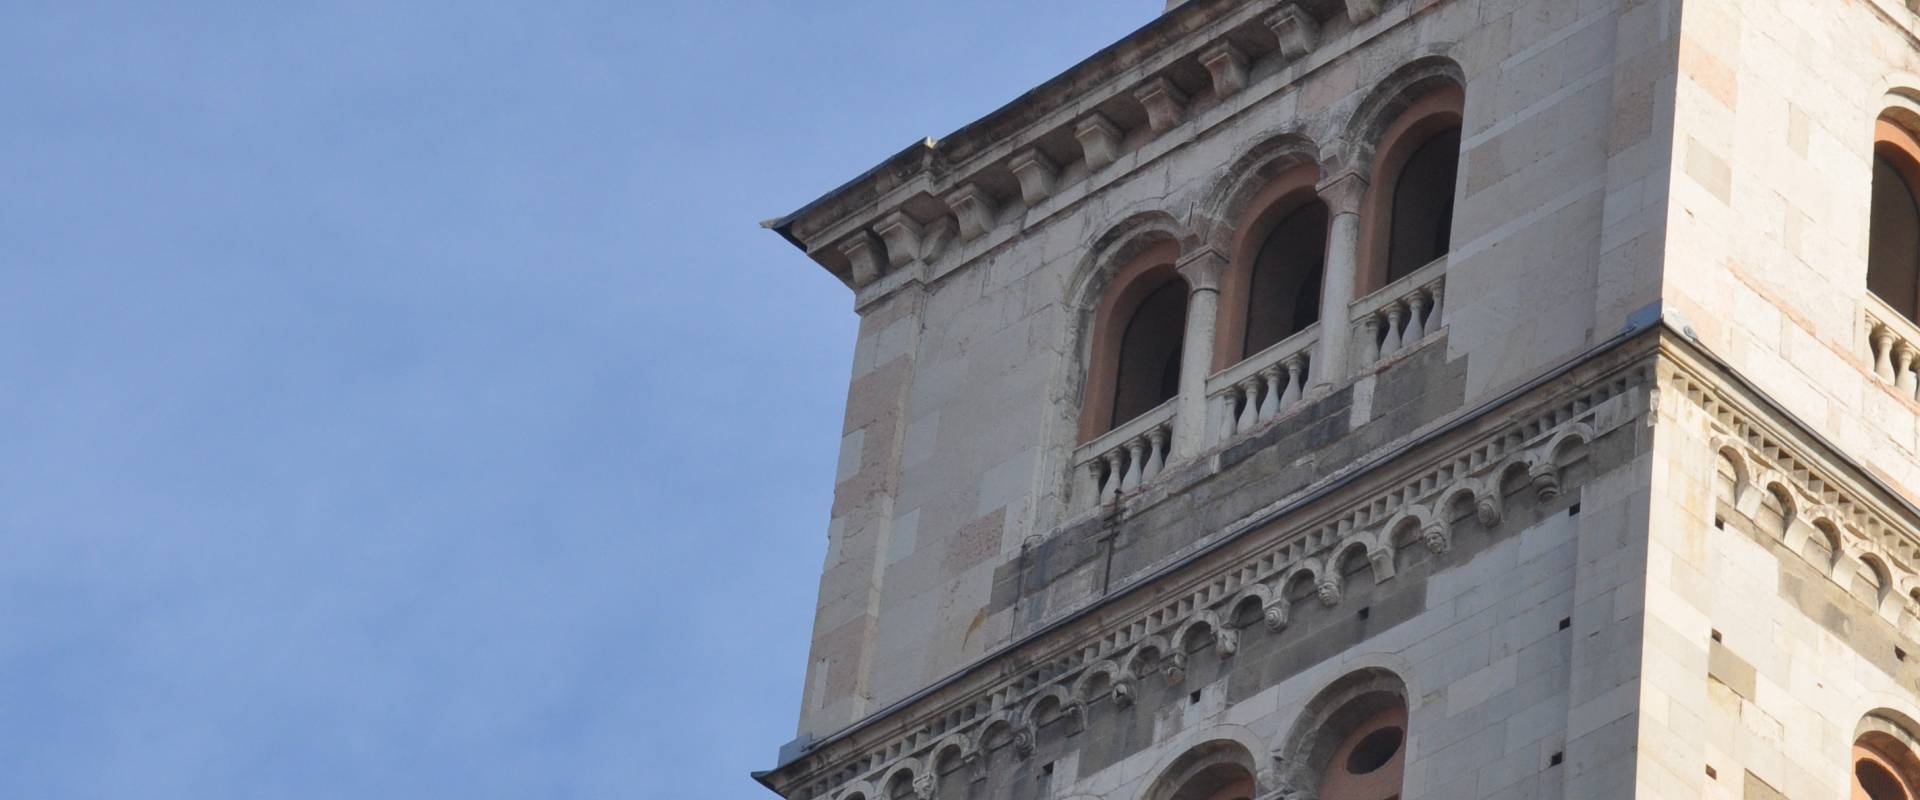 Ghirlandina, Torre di Modena photo by Chiara Salazar Chiesa